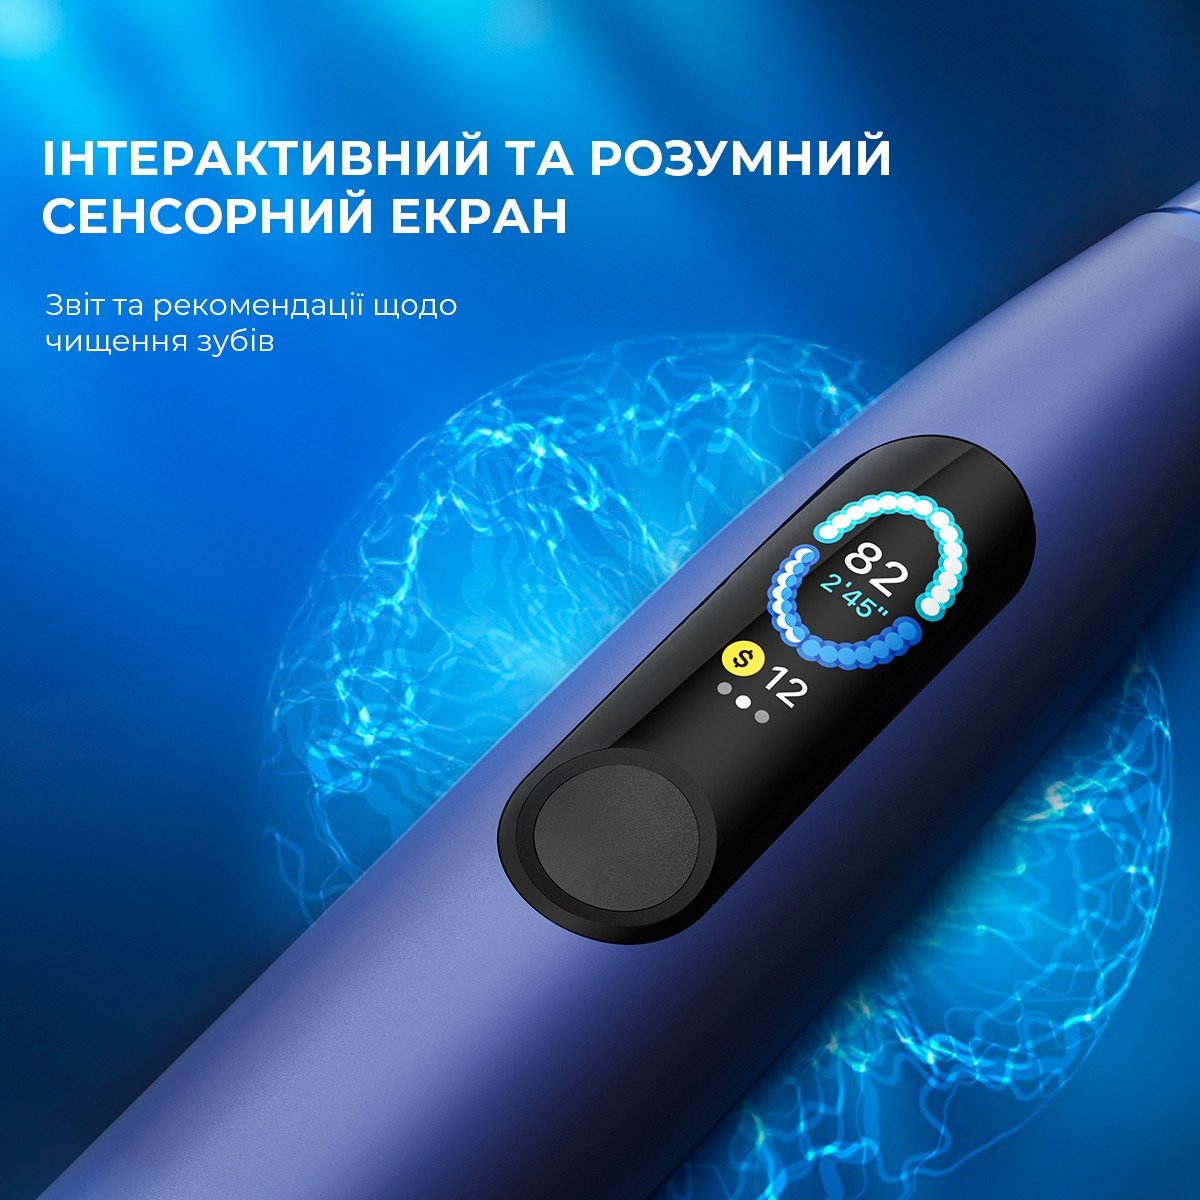 Oclean X Pro Smart Electric Toothbrush - ItemBear.com